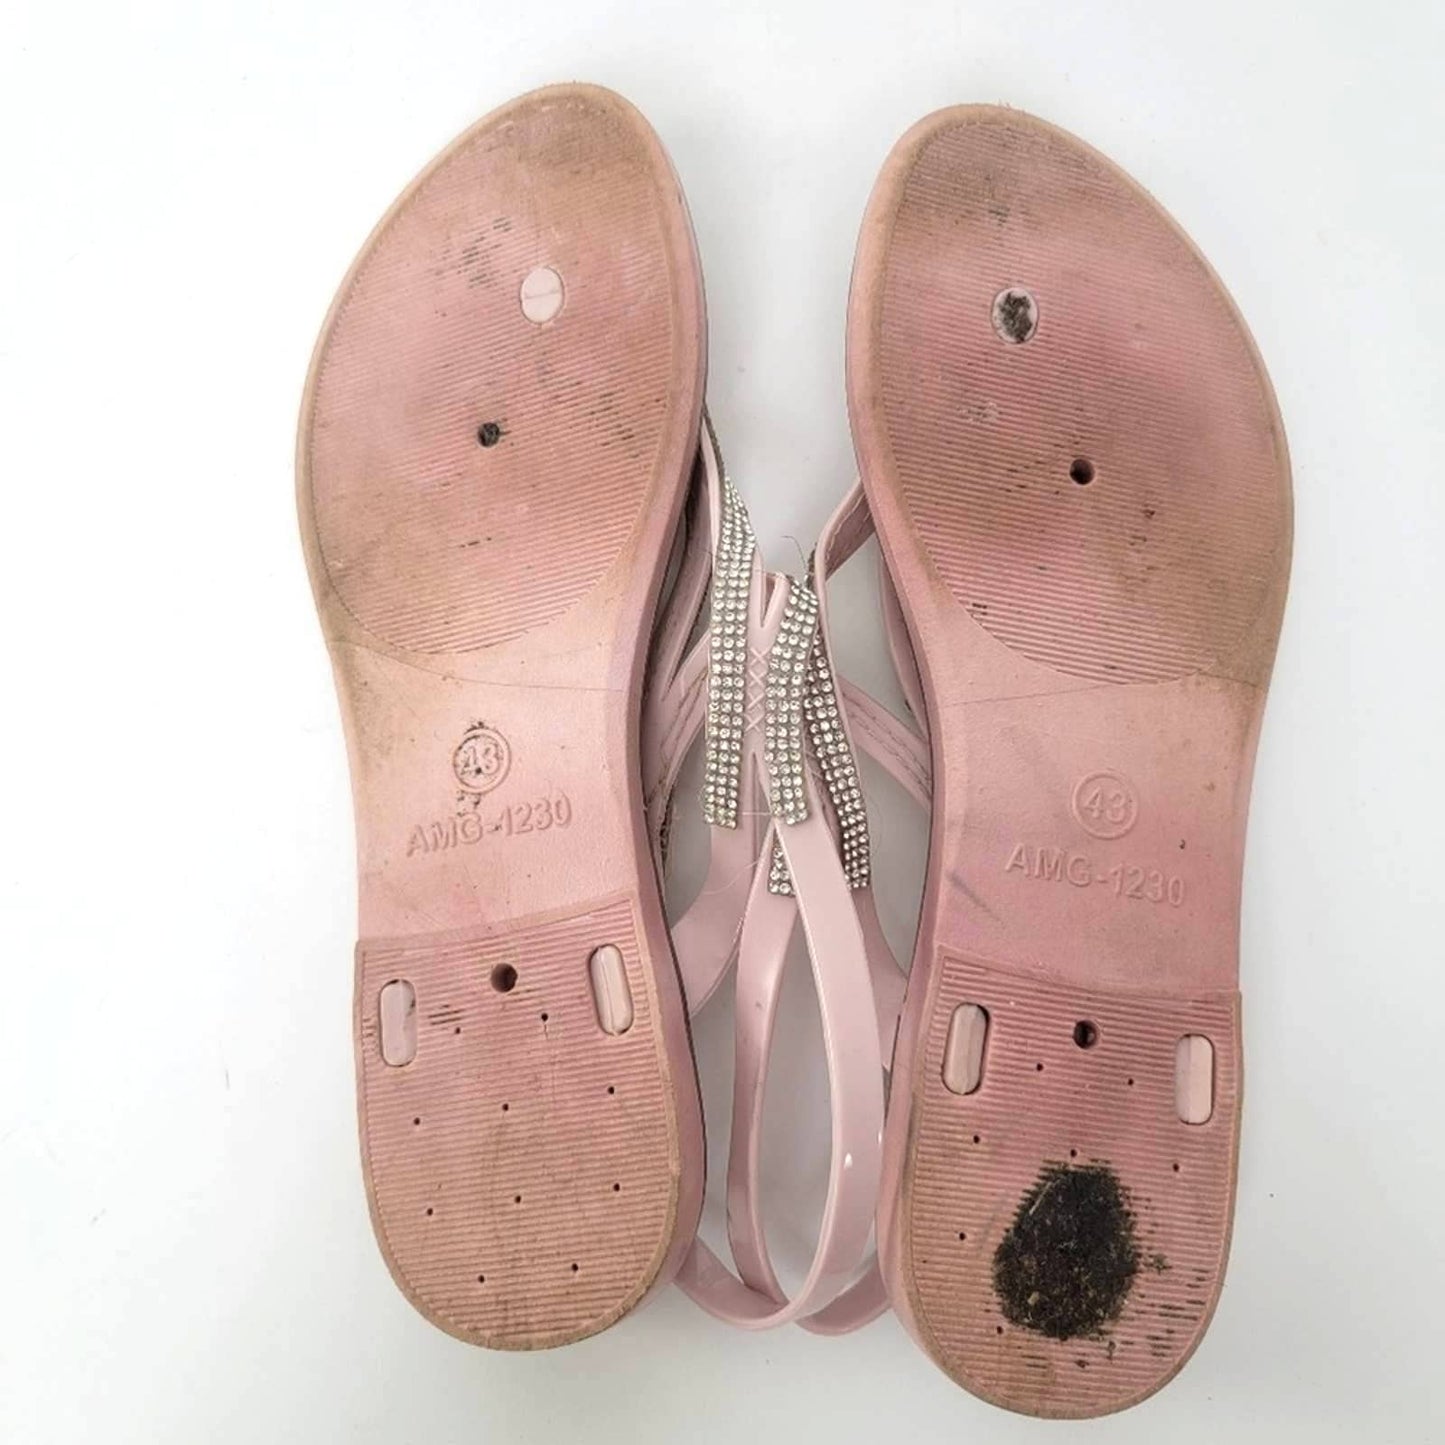 Chatties Pink Rhinestone Thong Flip Flop Sandals - 9.5/10